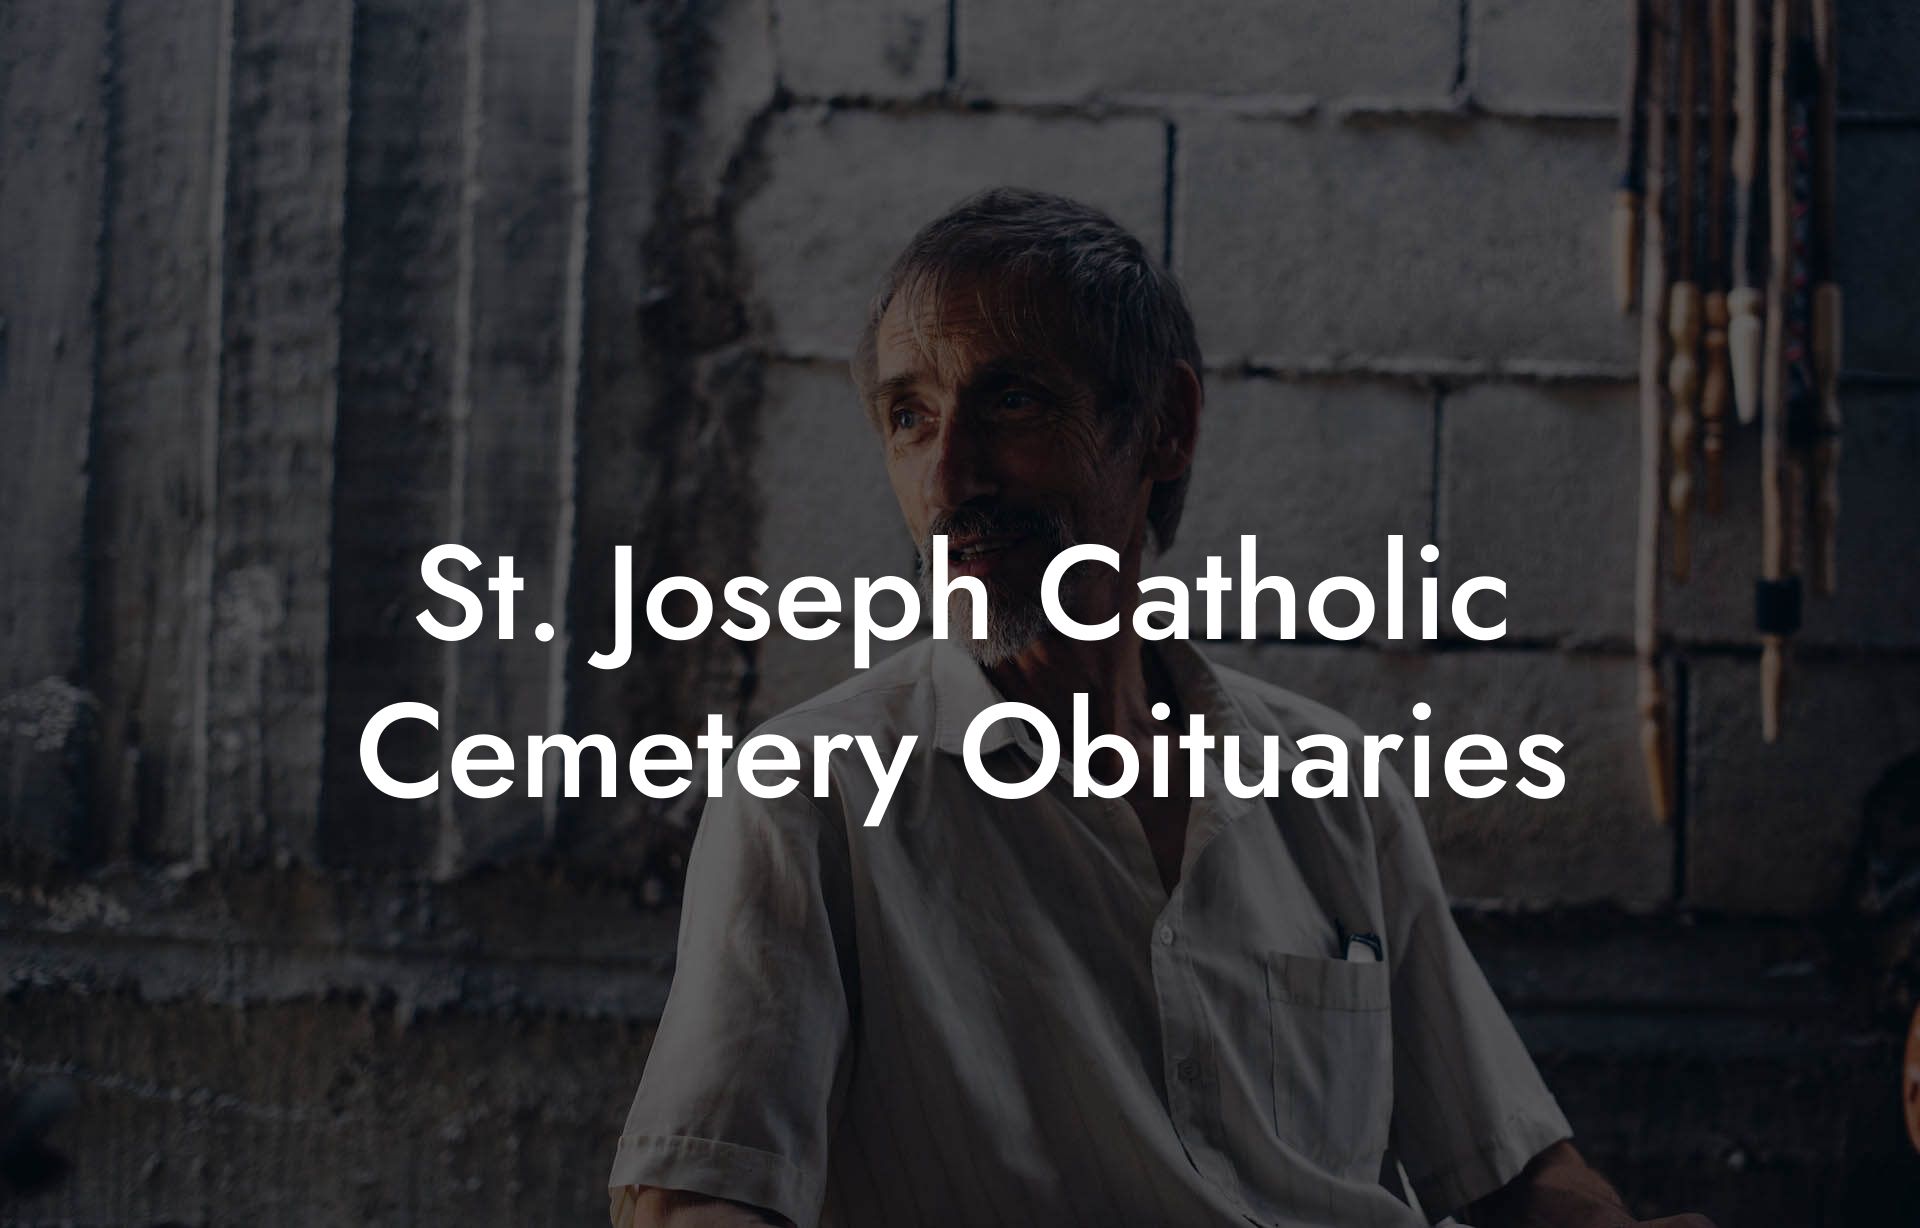 St. Joseph Catholic Cemetery Obituaries